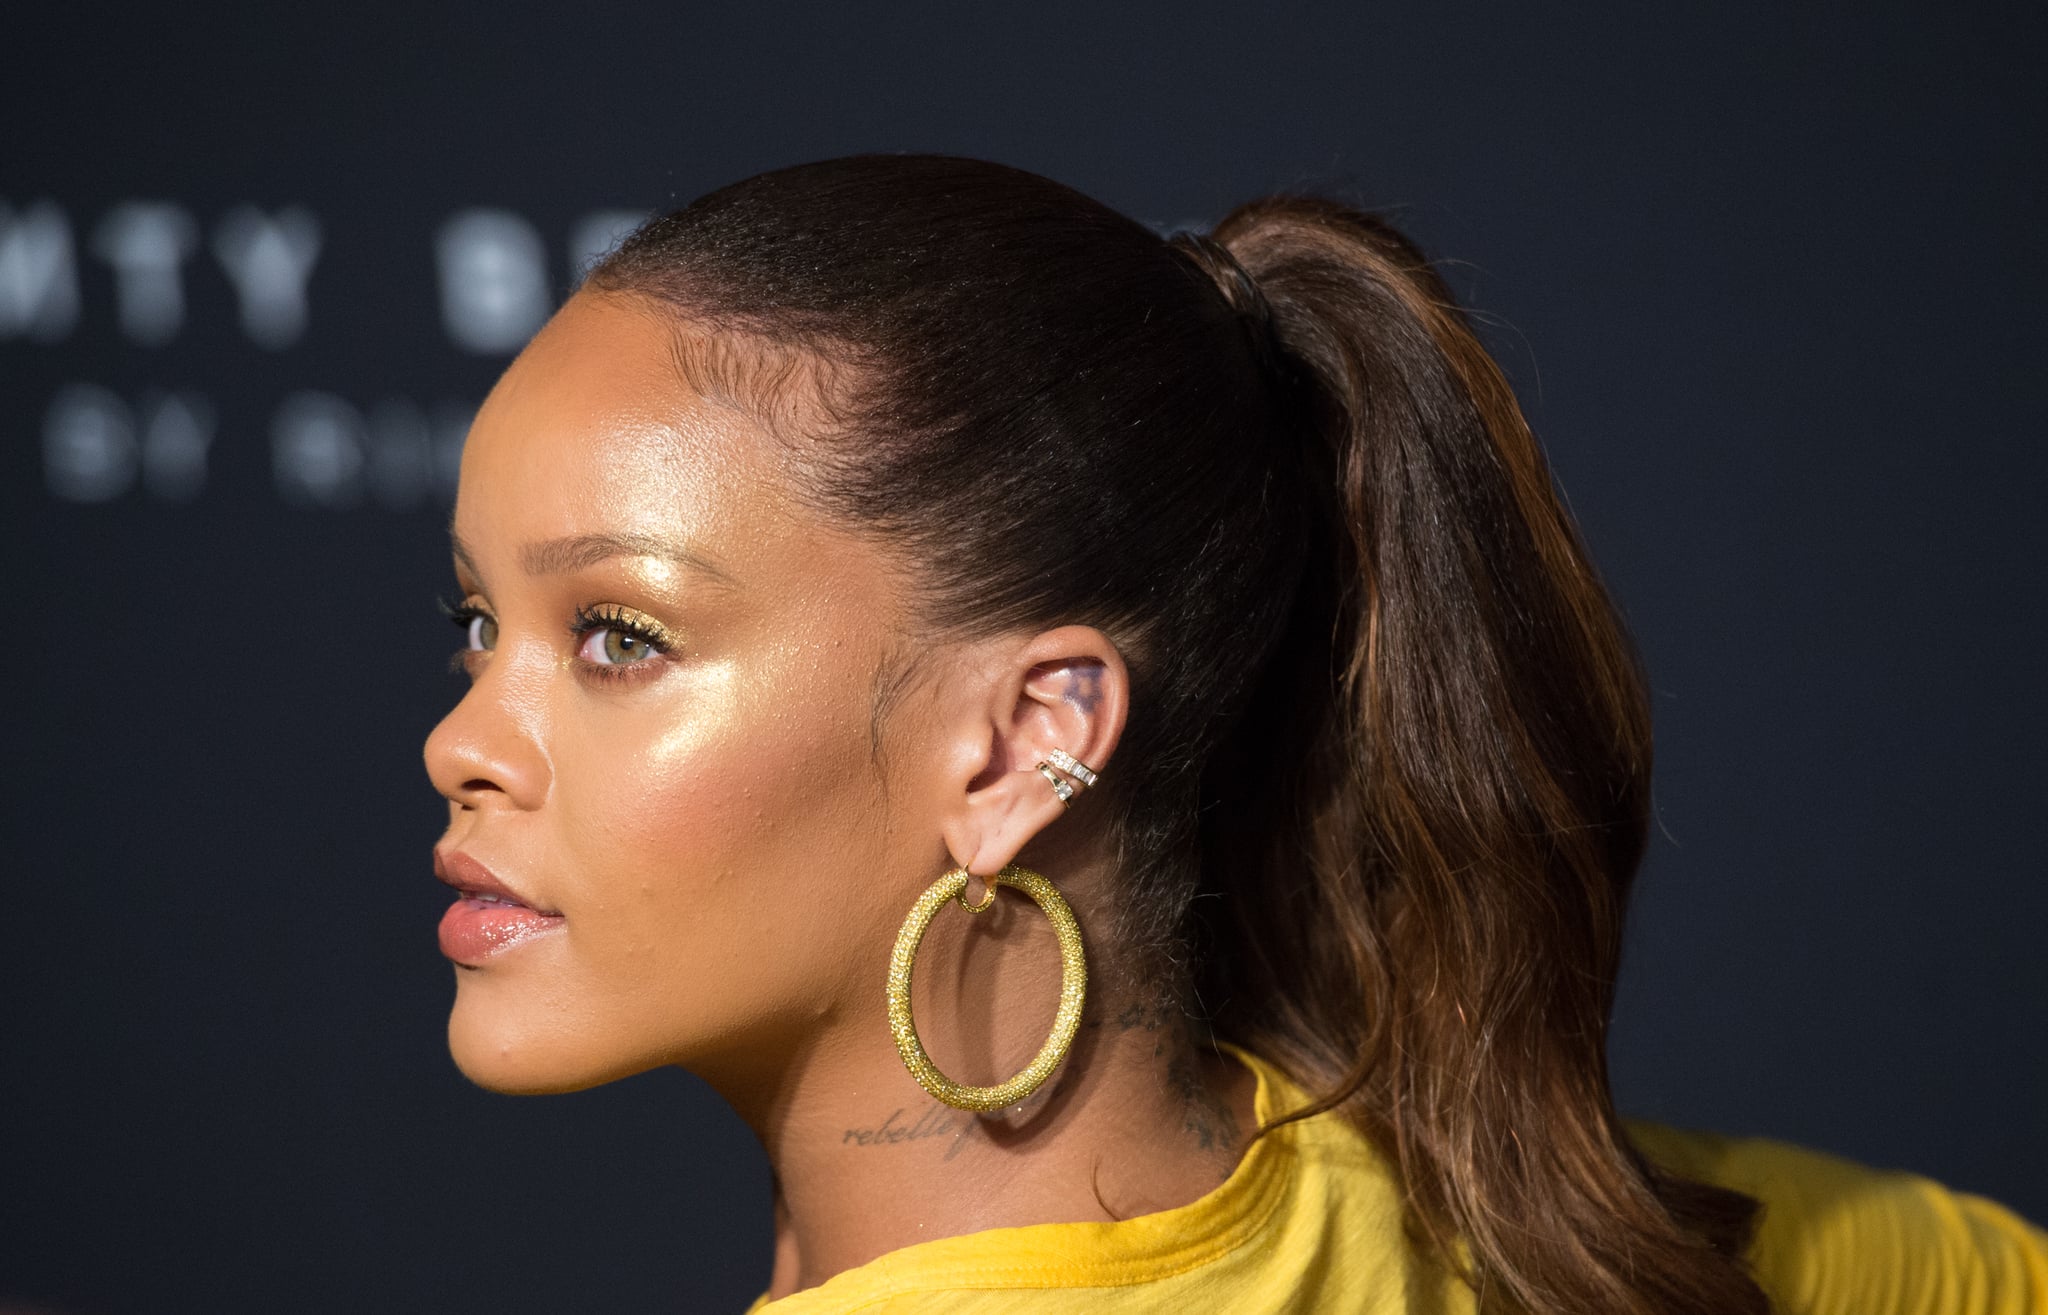 ovn glide Engel Rihanna Wearing Fenty Beauty Killawatt Freestyle Highlighter | Rihanna's  Gold Fenty Highlighter Is the Most Extra Product We've Ever Tried |  POPSUGAR Beauty Photo 2